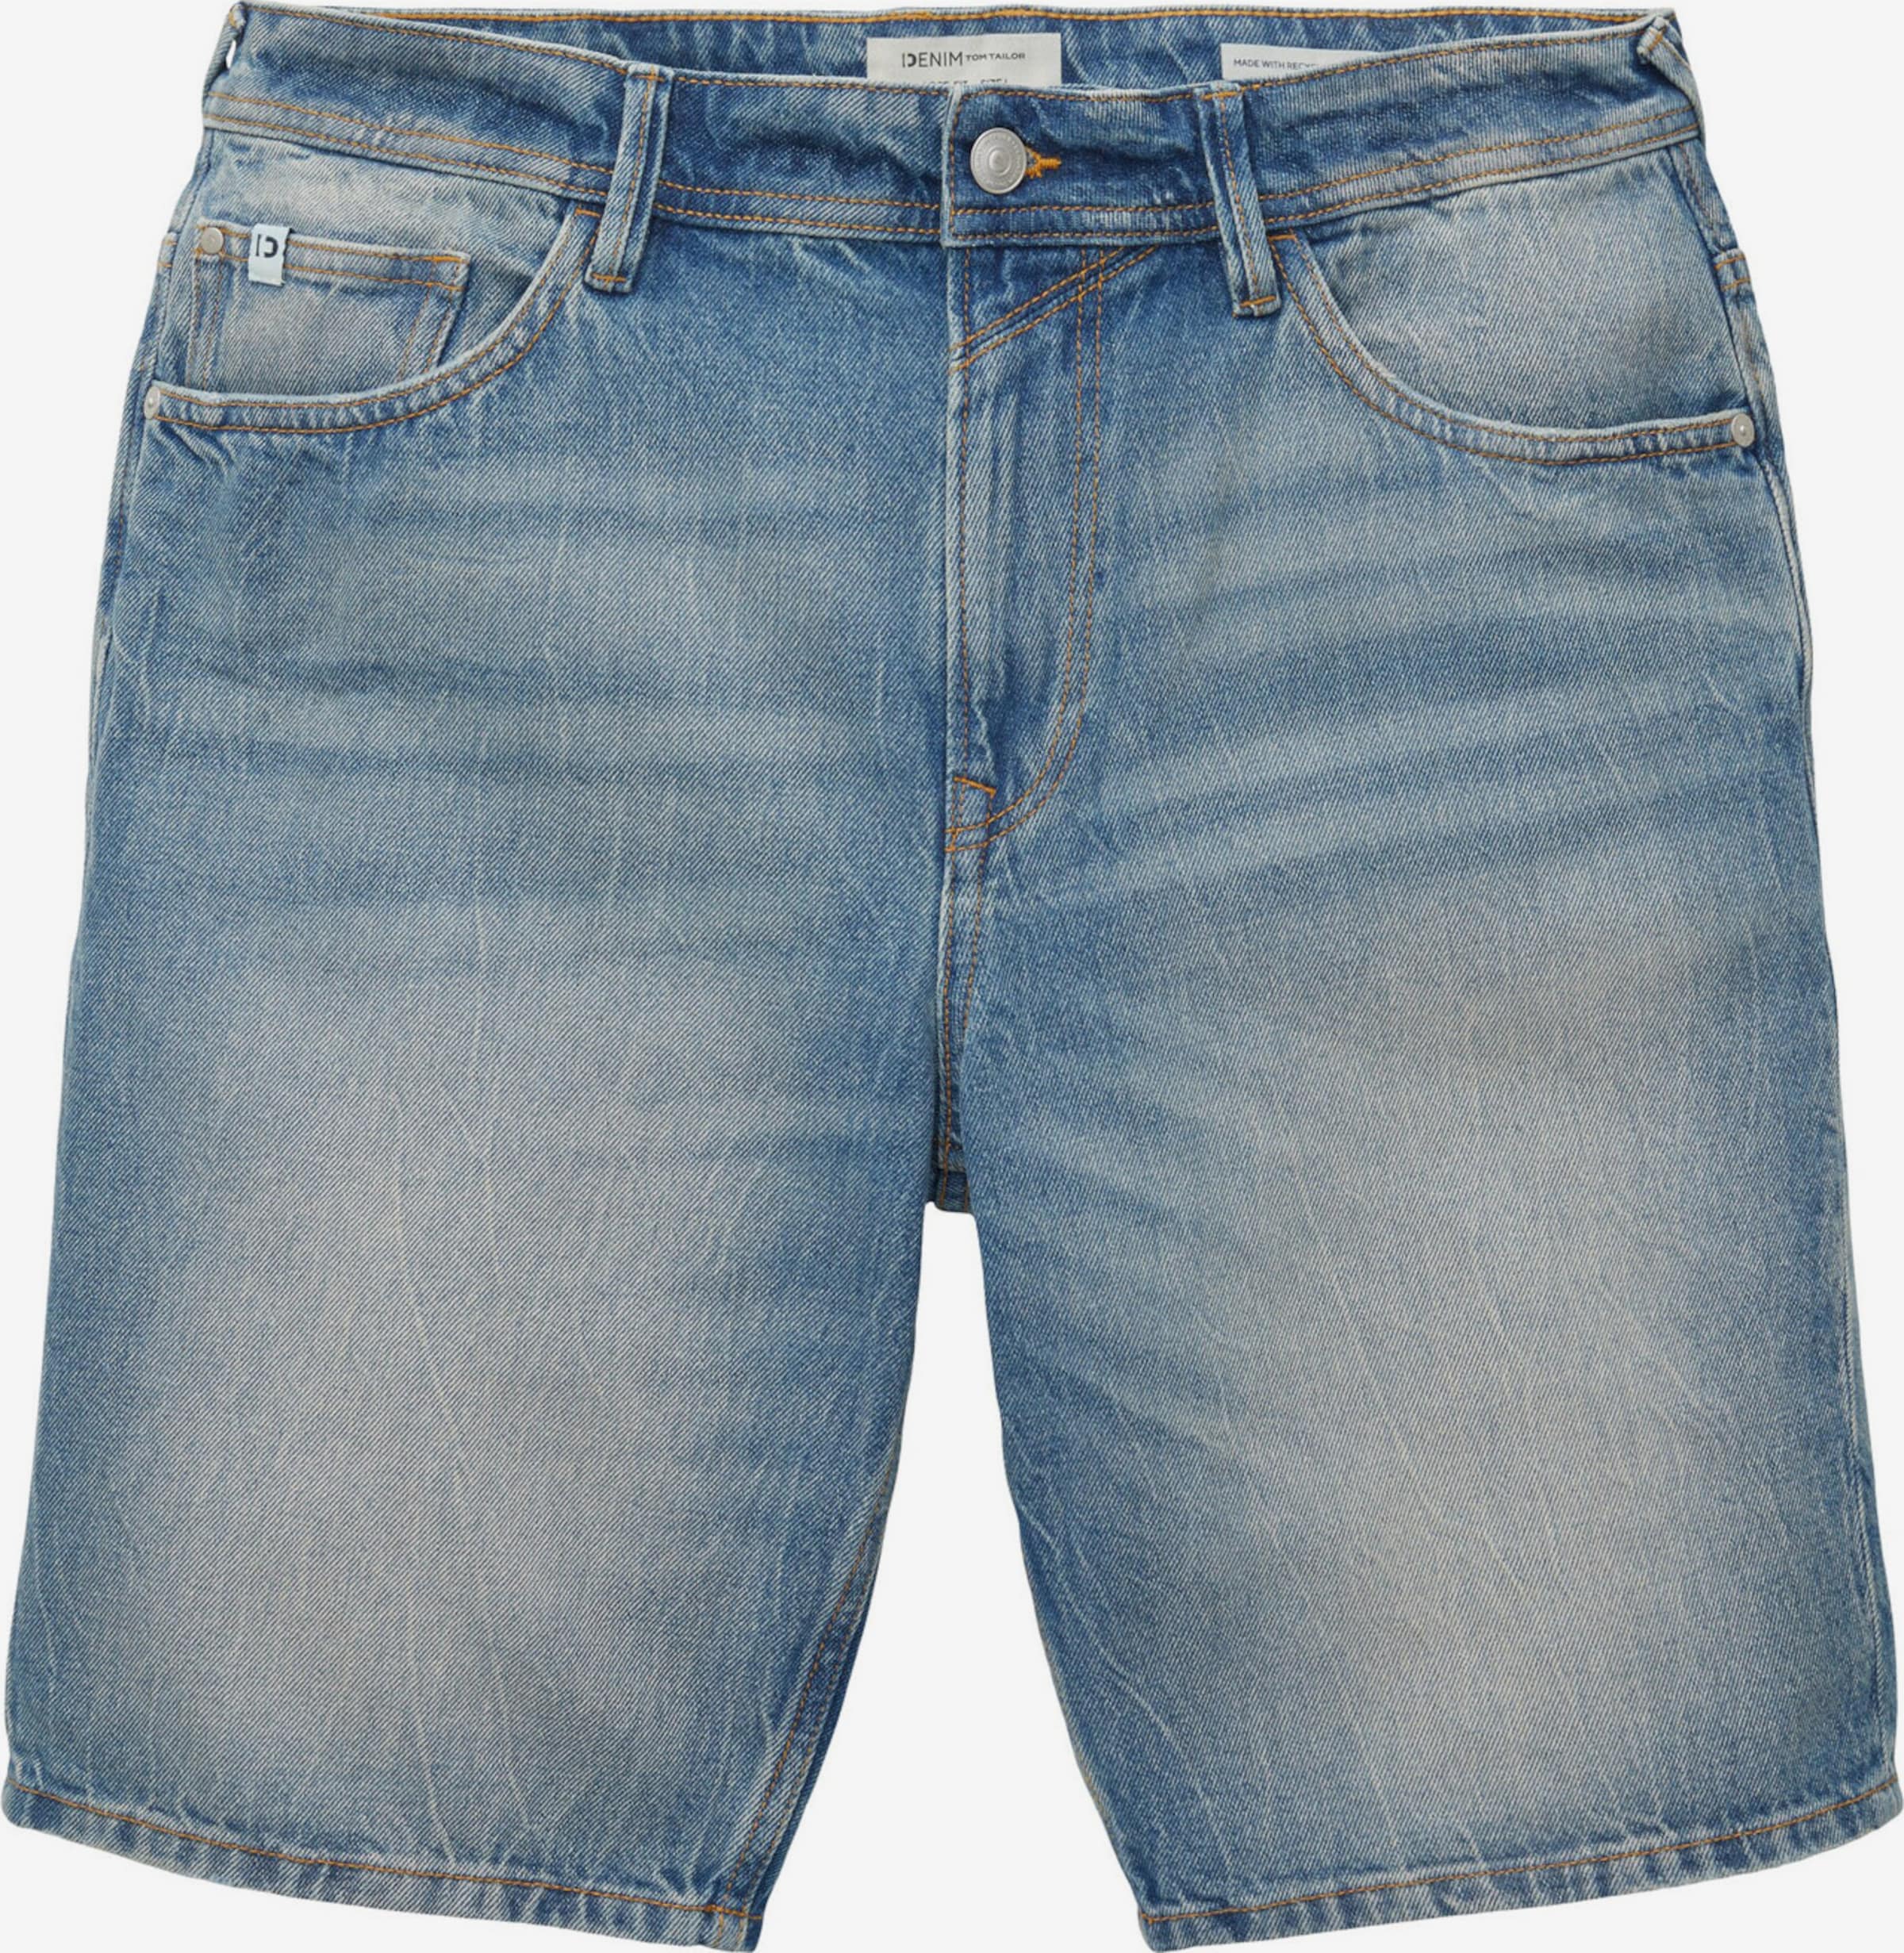 TAILOR in ABOUT Jeans Blue DENIM | YOU Regular TOM